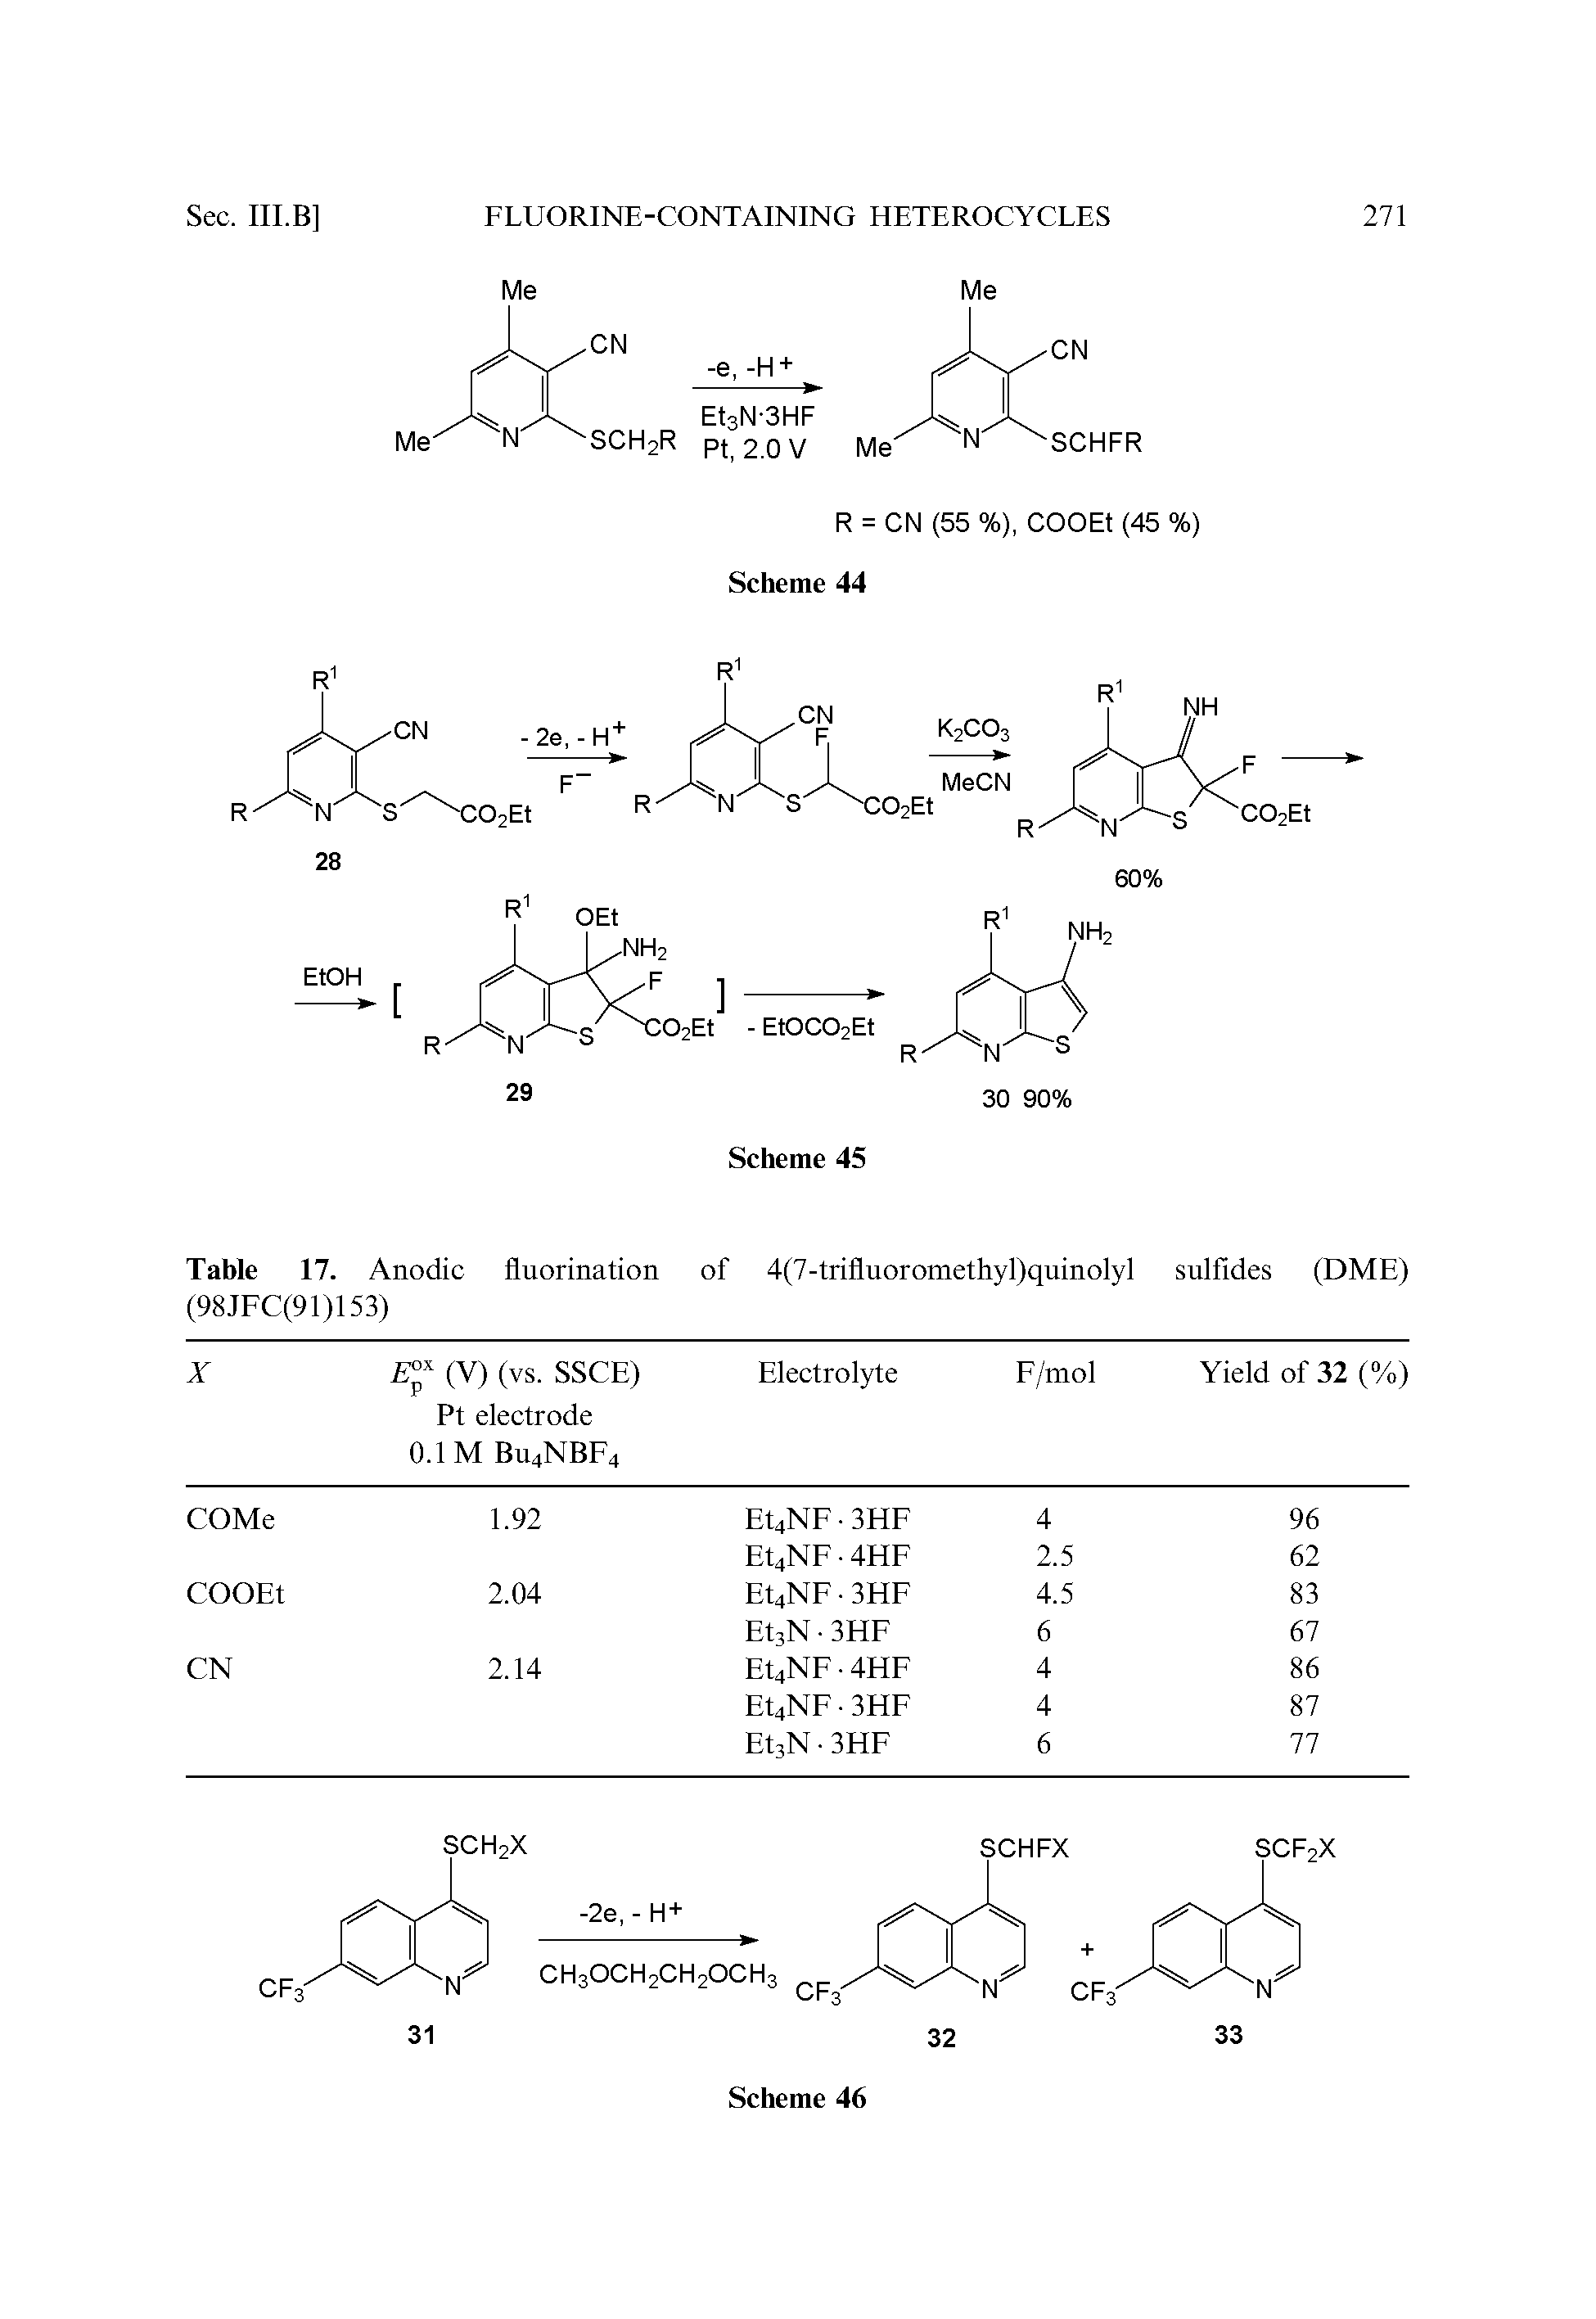 Table 17. Anodic fluorination of 4(7-trifluoromethyl)quinolyl sulfides (DME) (98JFC(91)153)...